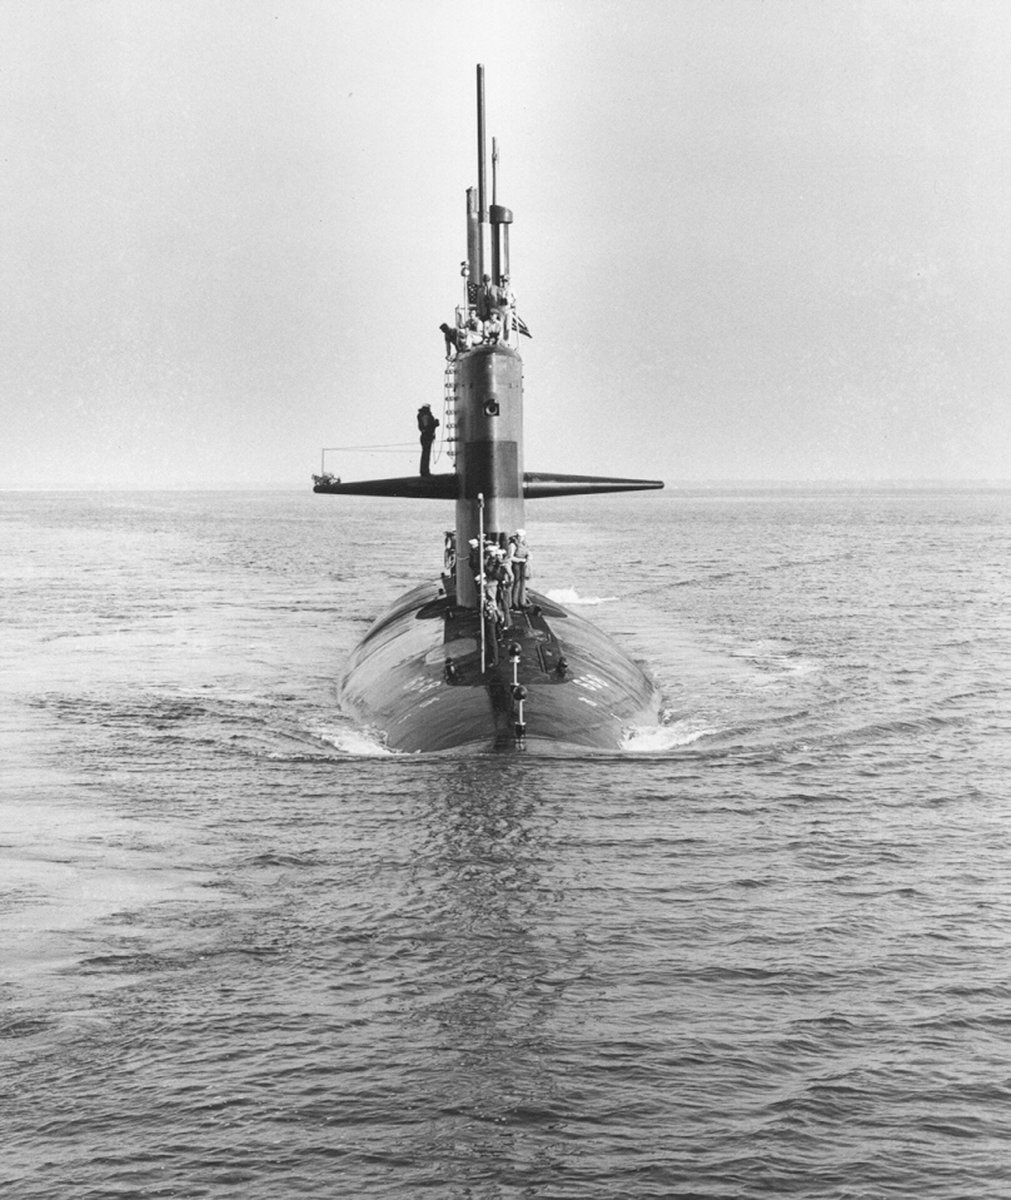 USS Spadefish (SSN-668) Sturgeon Class Attack Submarine 1969-1997 #SubWednesday #Submarines
@USNavy